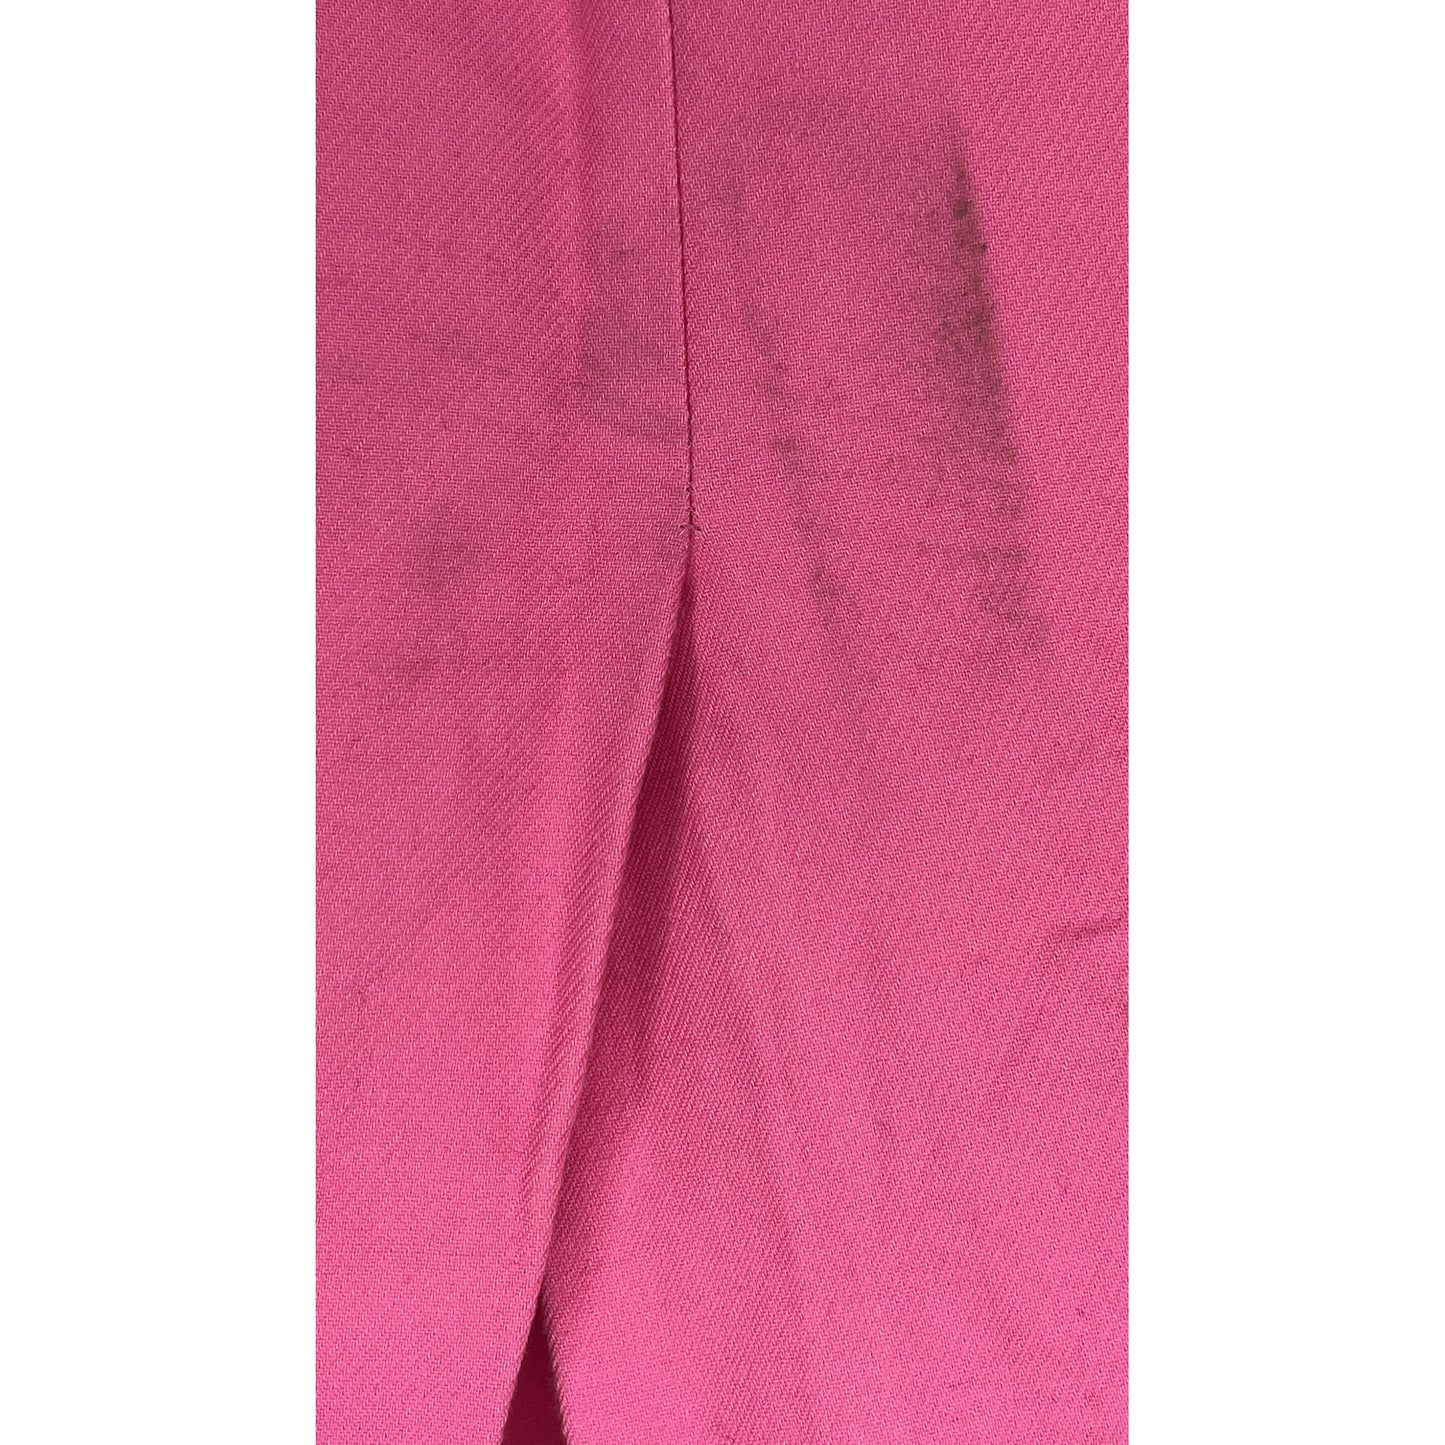 J Crew Pencil Skirt Above-Knee Scallop Detail Barbie-Pink Size 4 SKU 000417